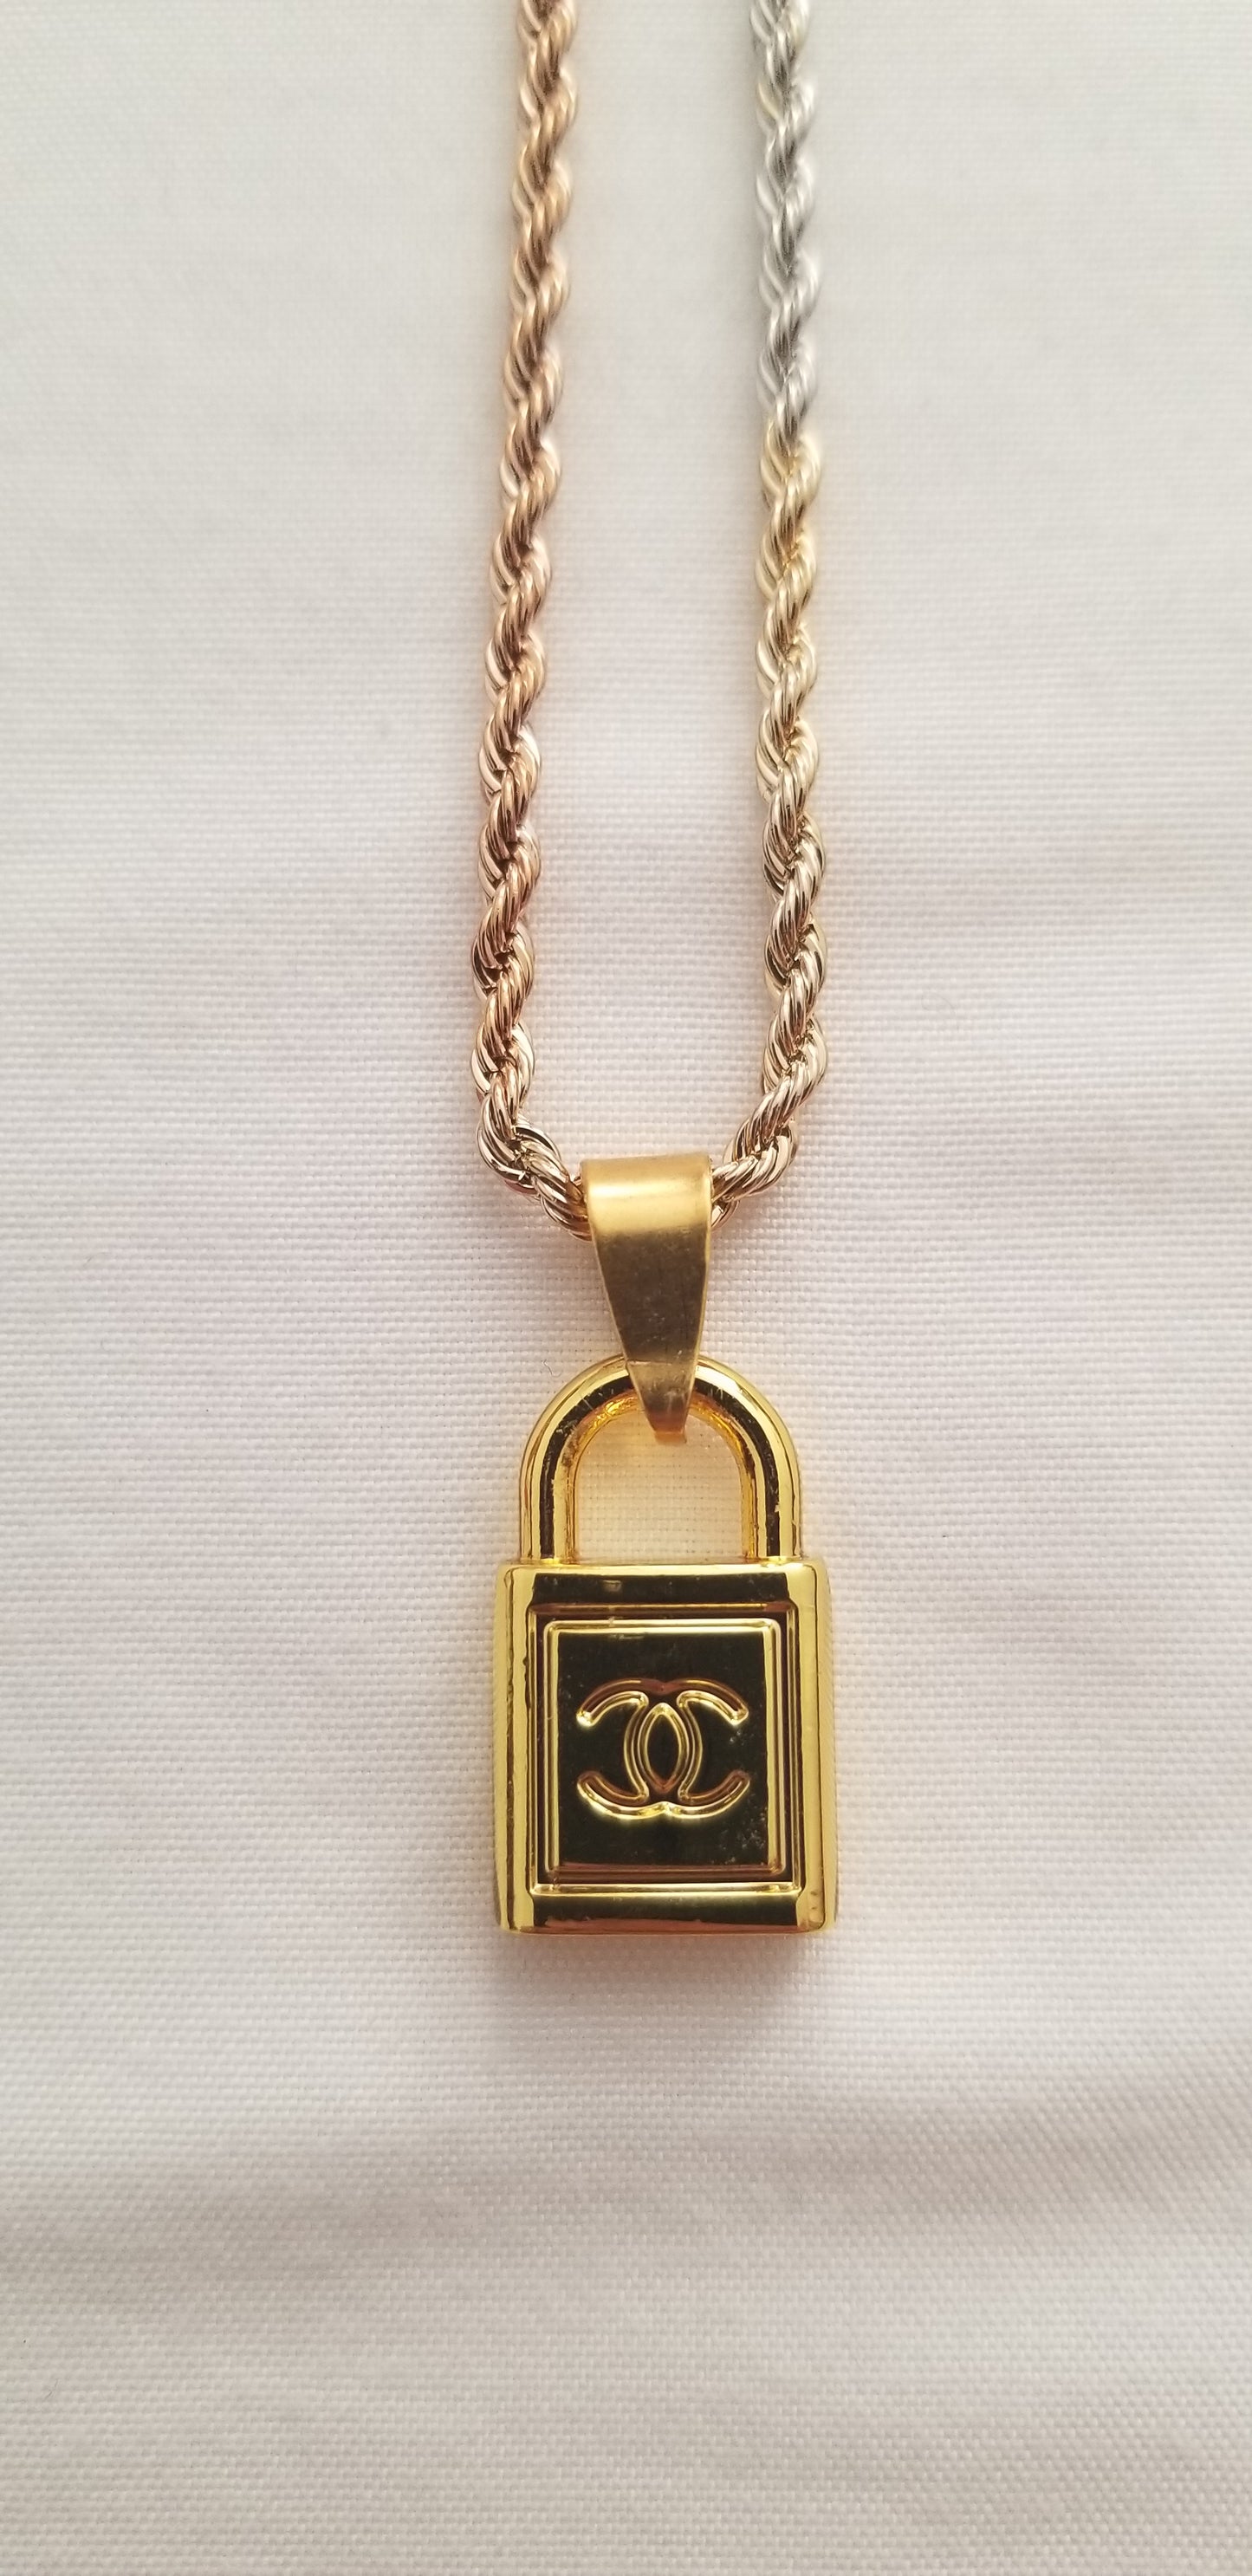 Chanel Small Lock Necklace Repurposed